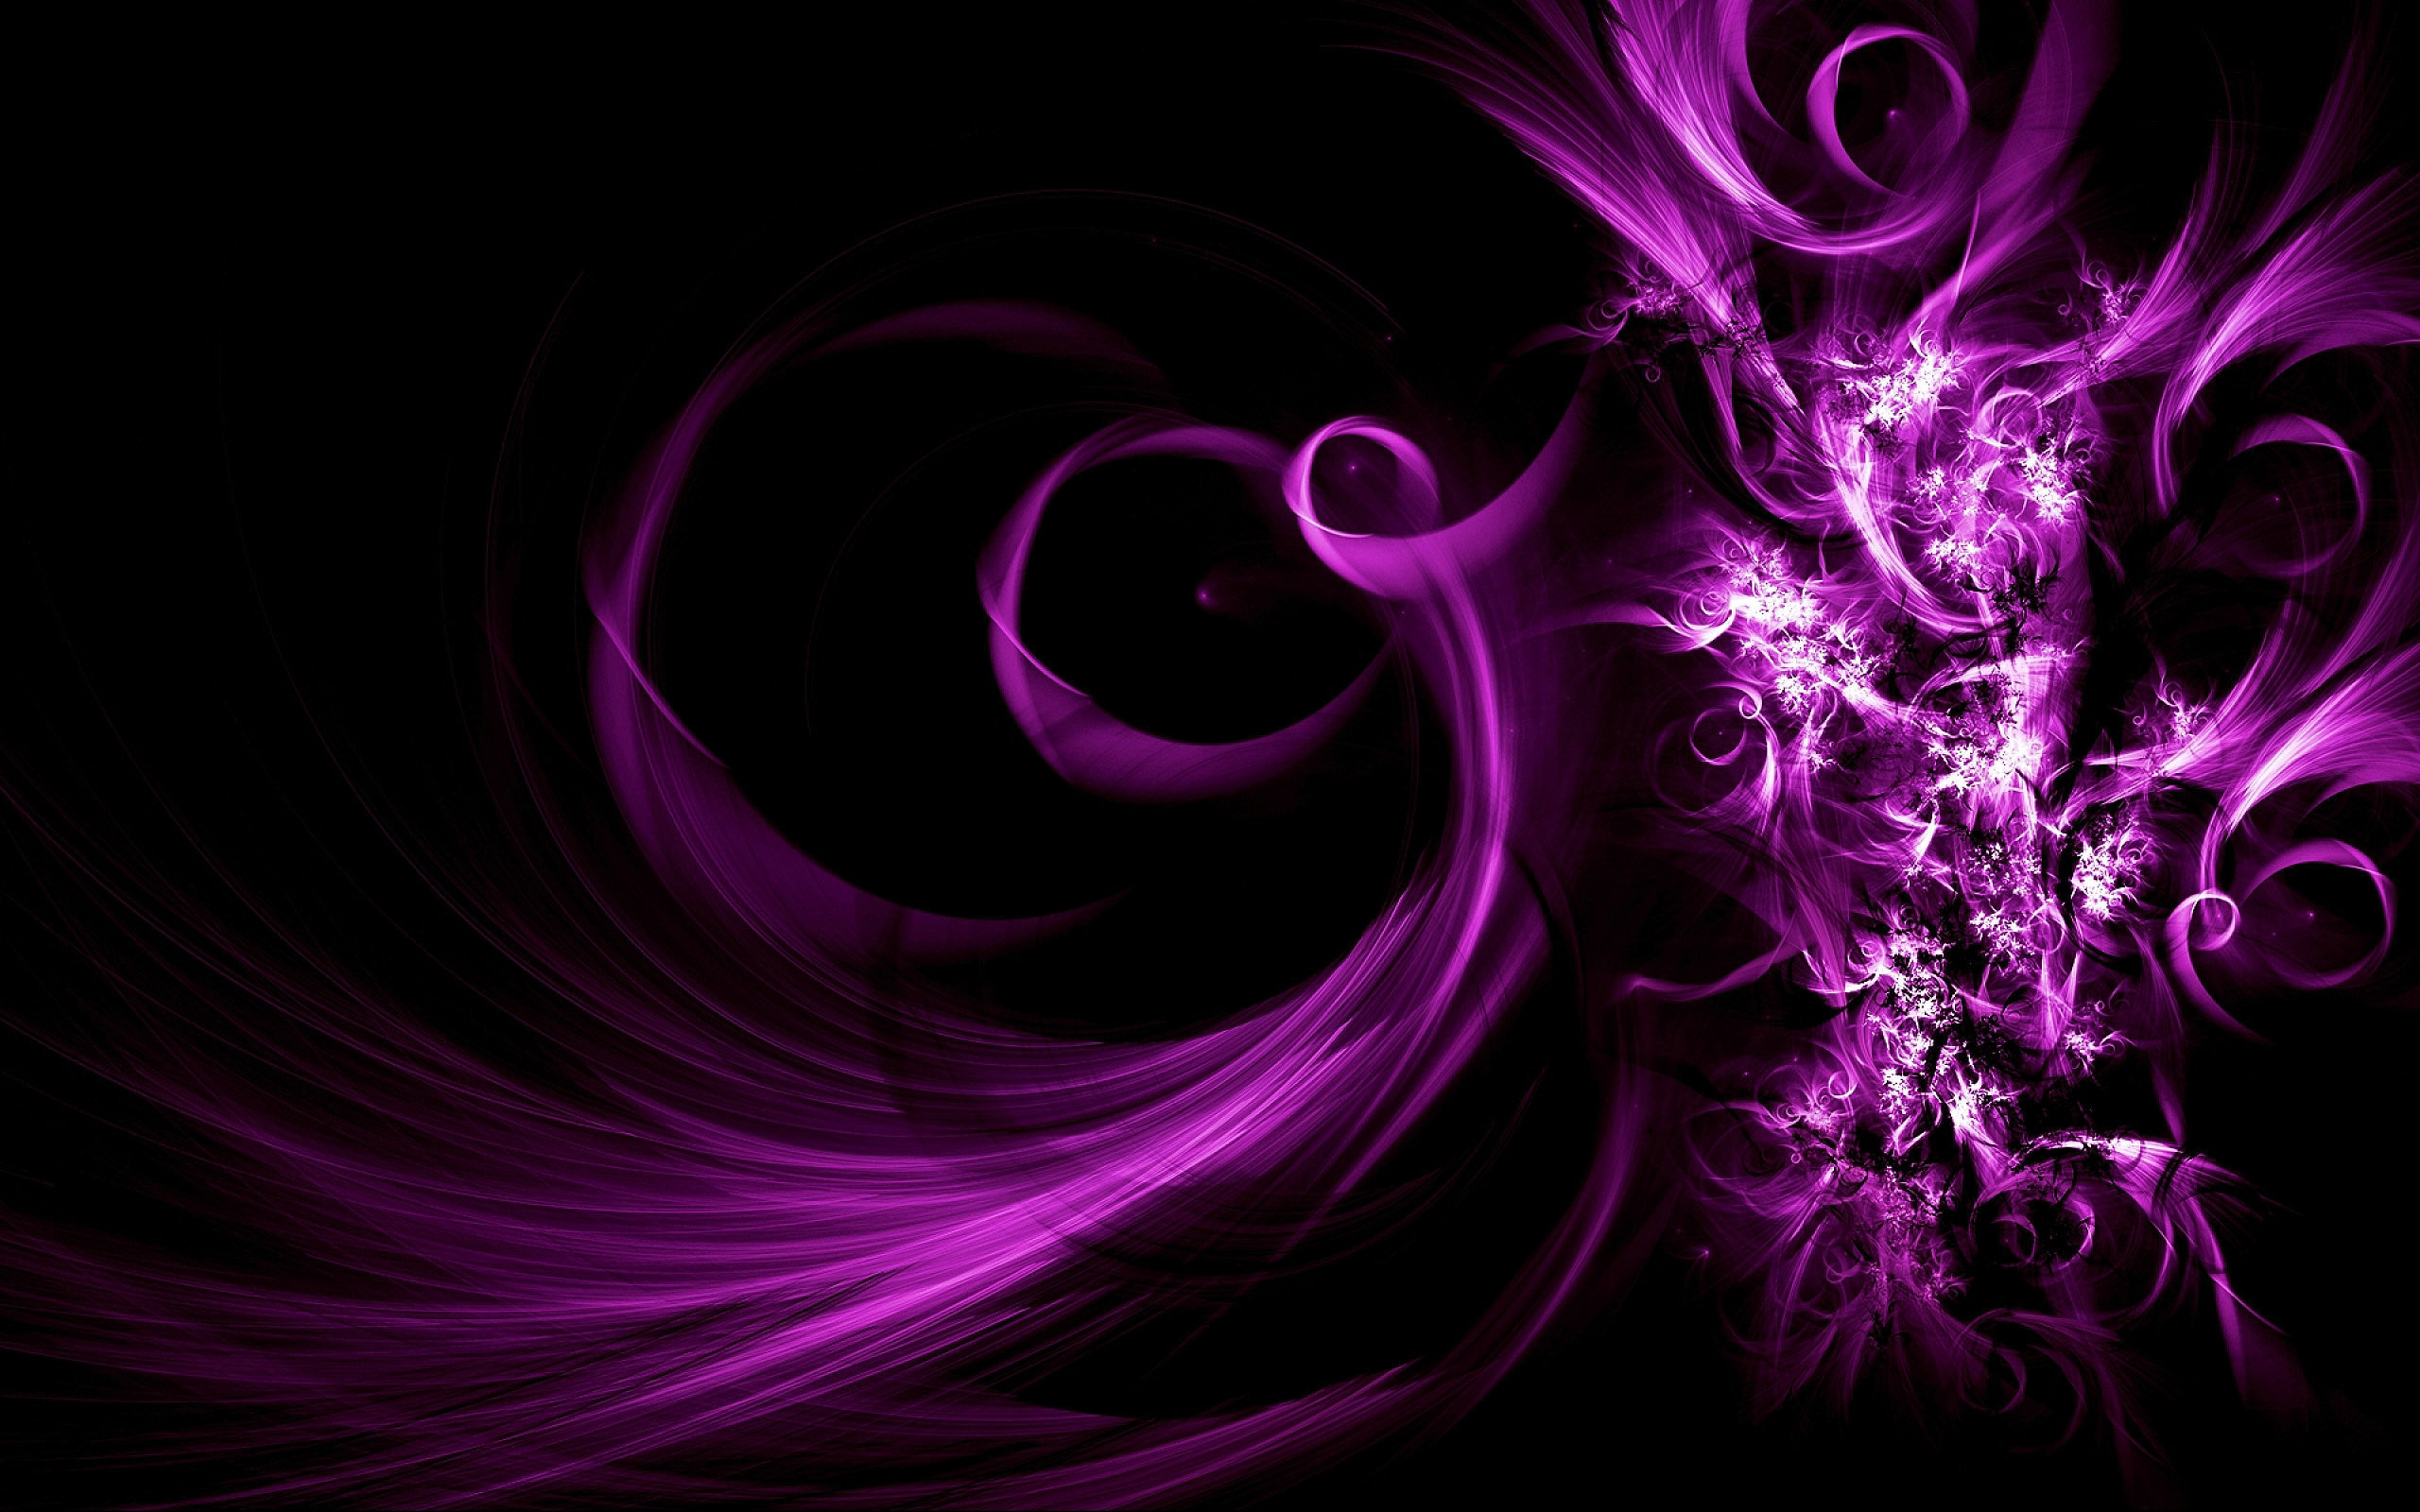 2560x1600 Glamorous Wallpaper px | 670.6 KB ratio: 8:5. Glamorous Abstract  Wallpapers Purple